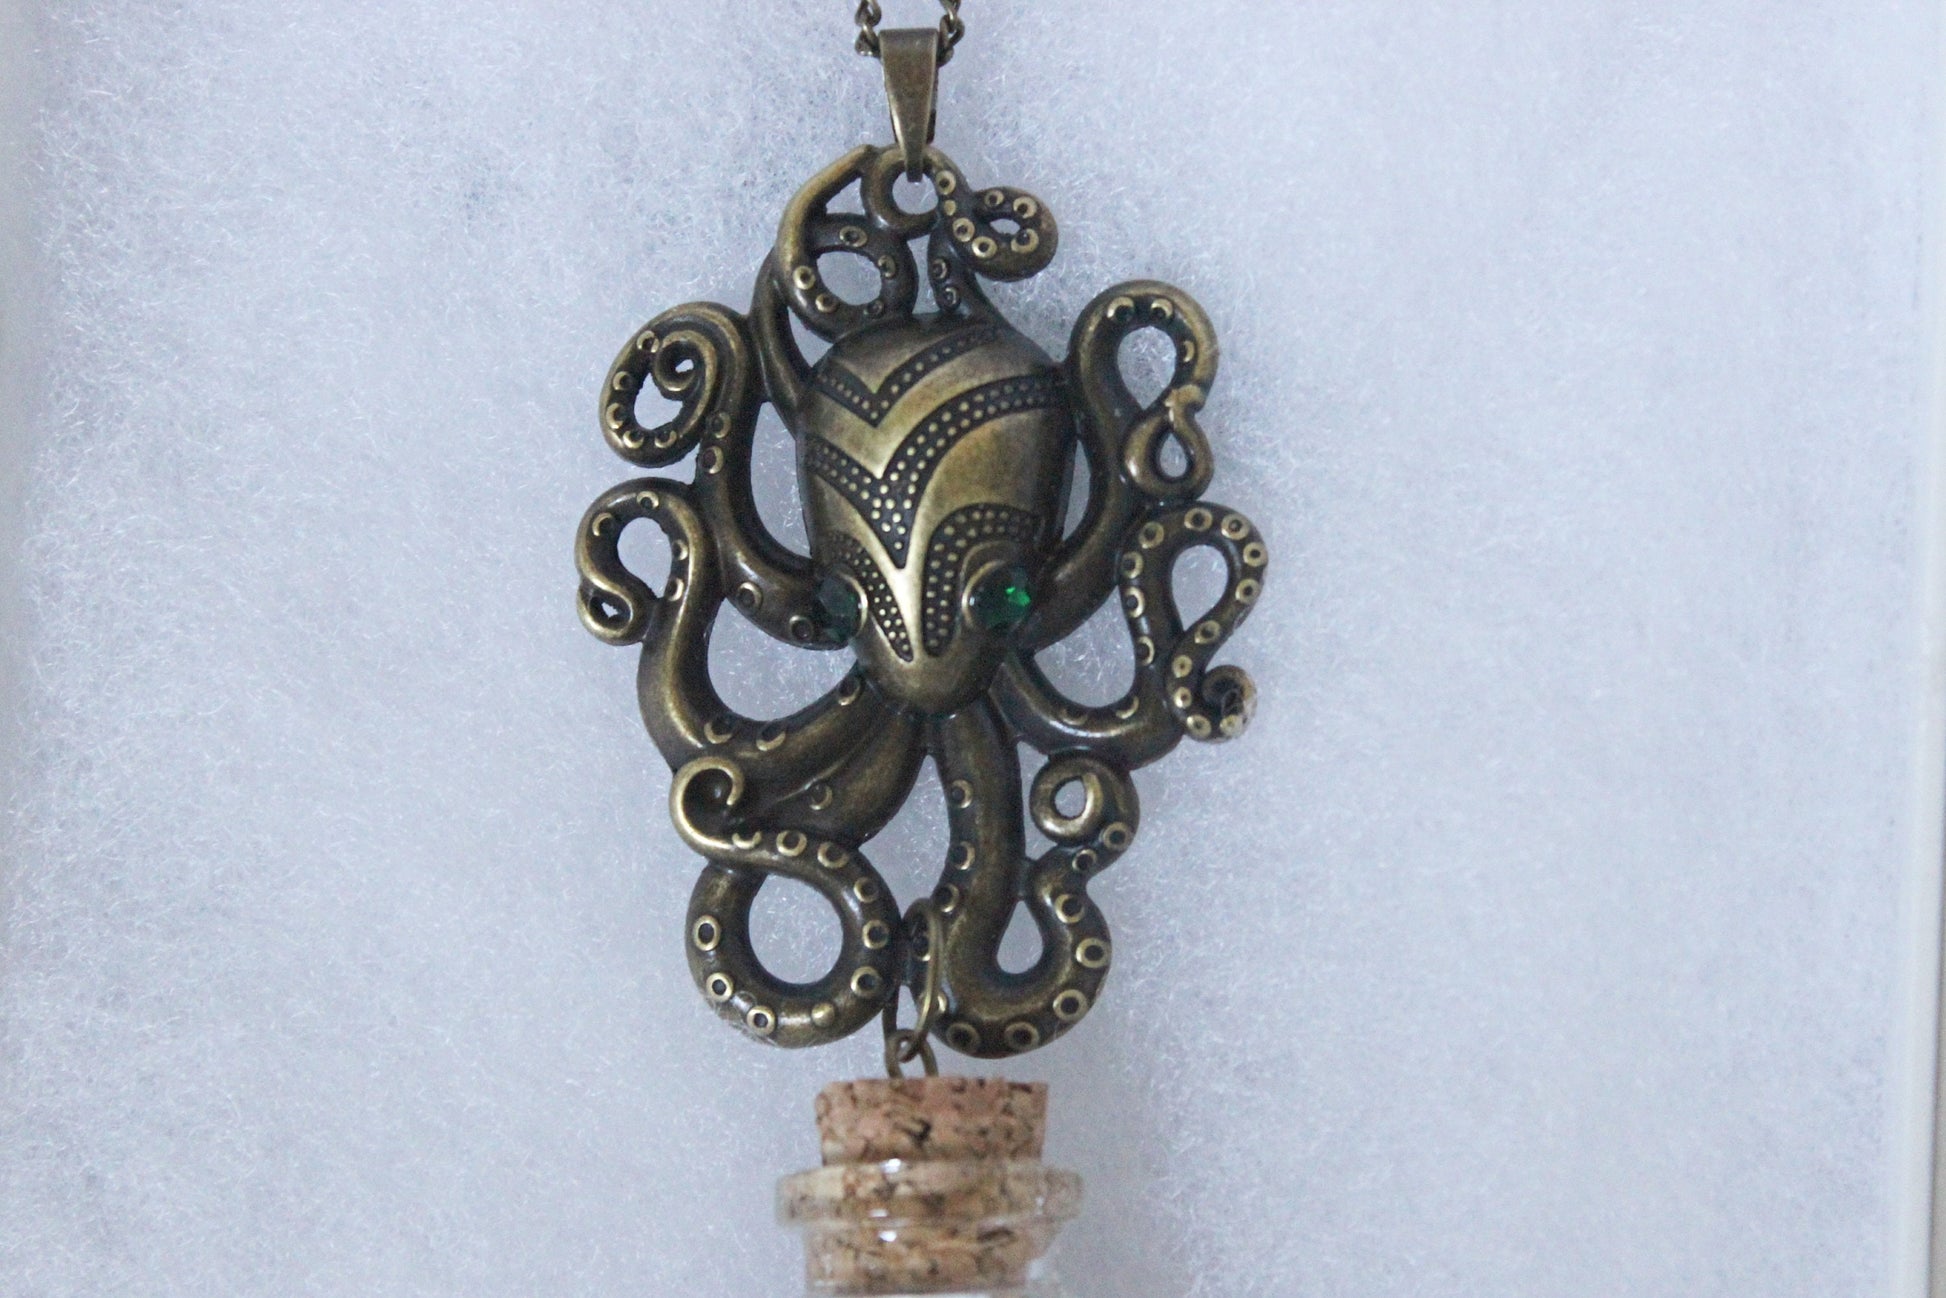 Octopus Spell Jar Necklace - Wildflower Moon Magic